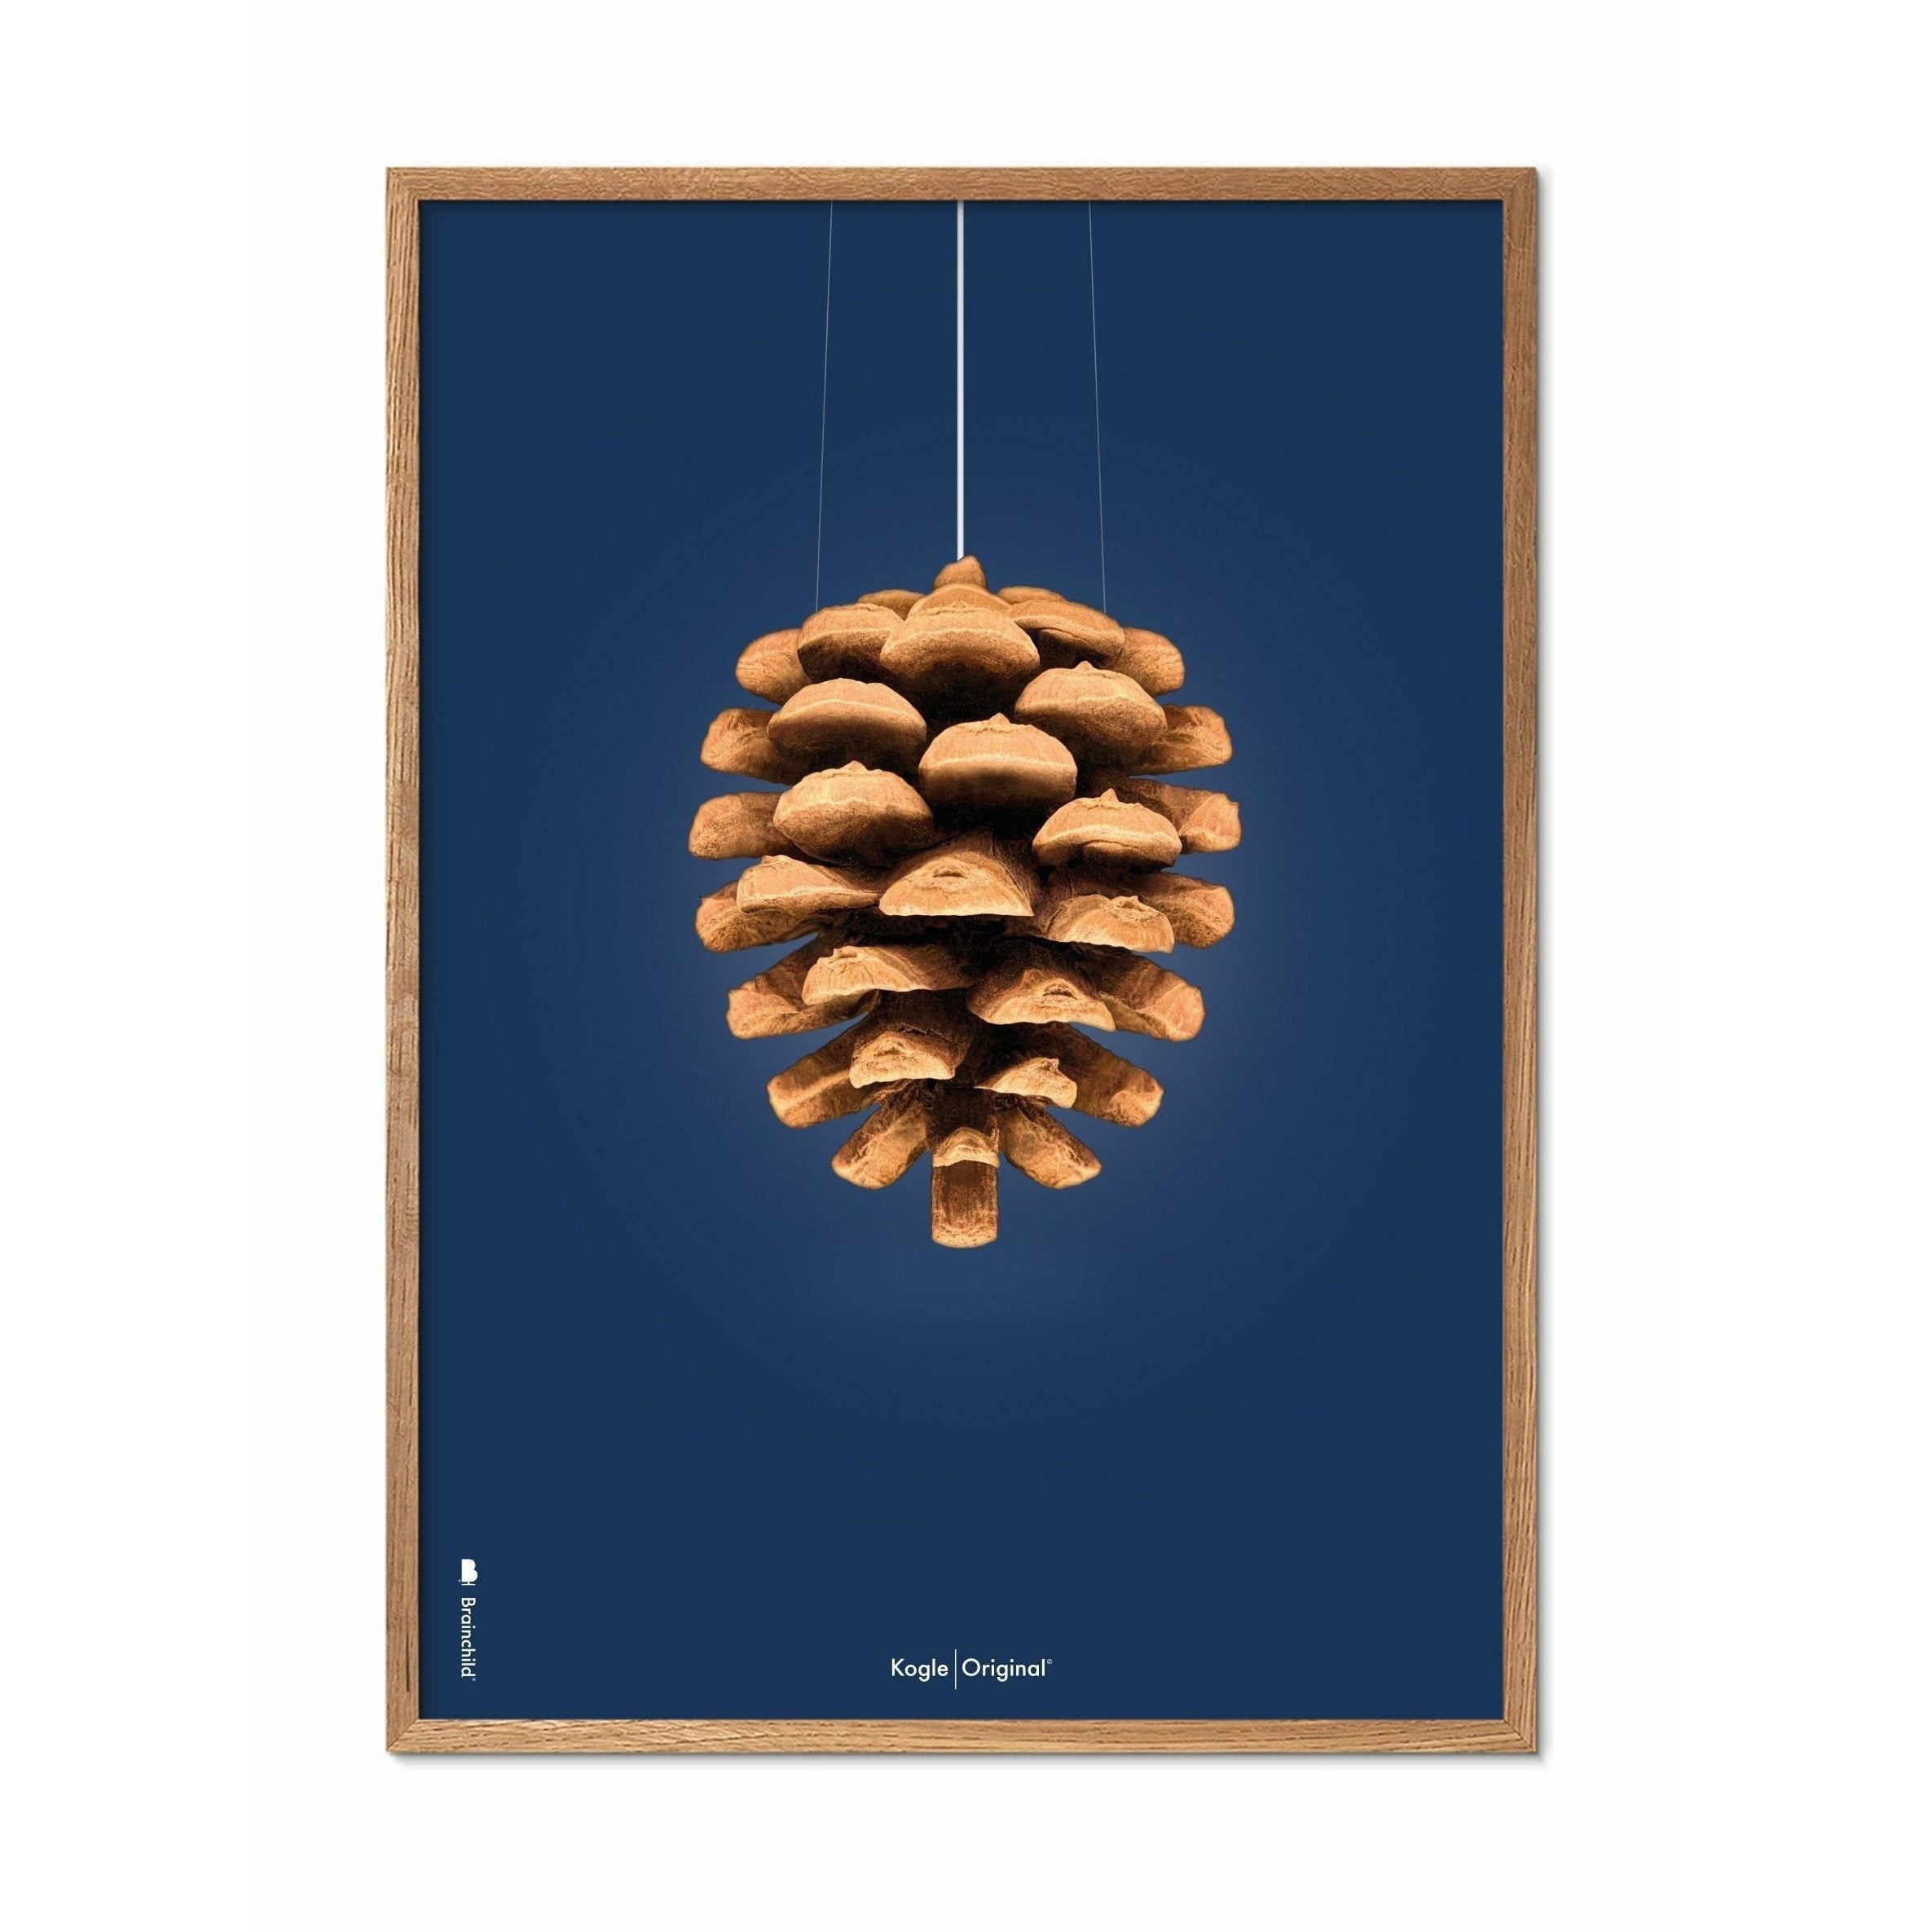 Brainchild Kogle Klassisk Plakat, Ramme I Lyst Træ 50X70 Cm, Mørkeblå Baggrund